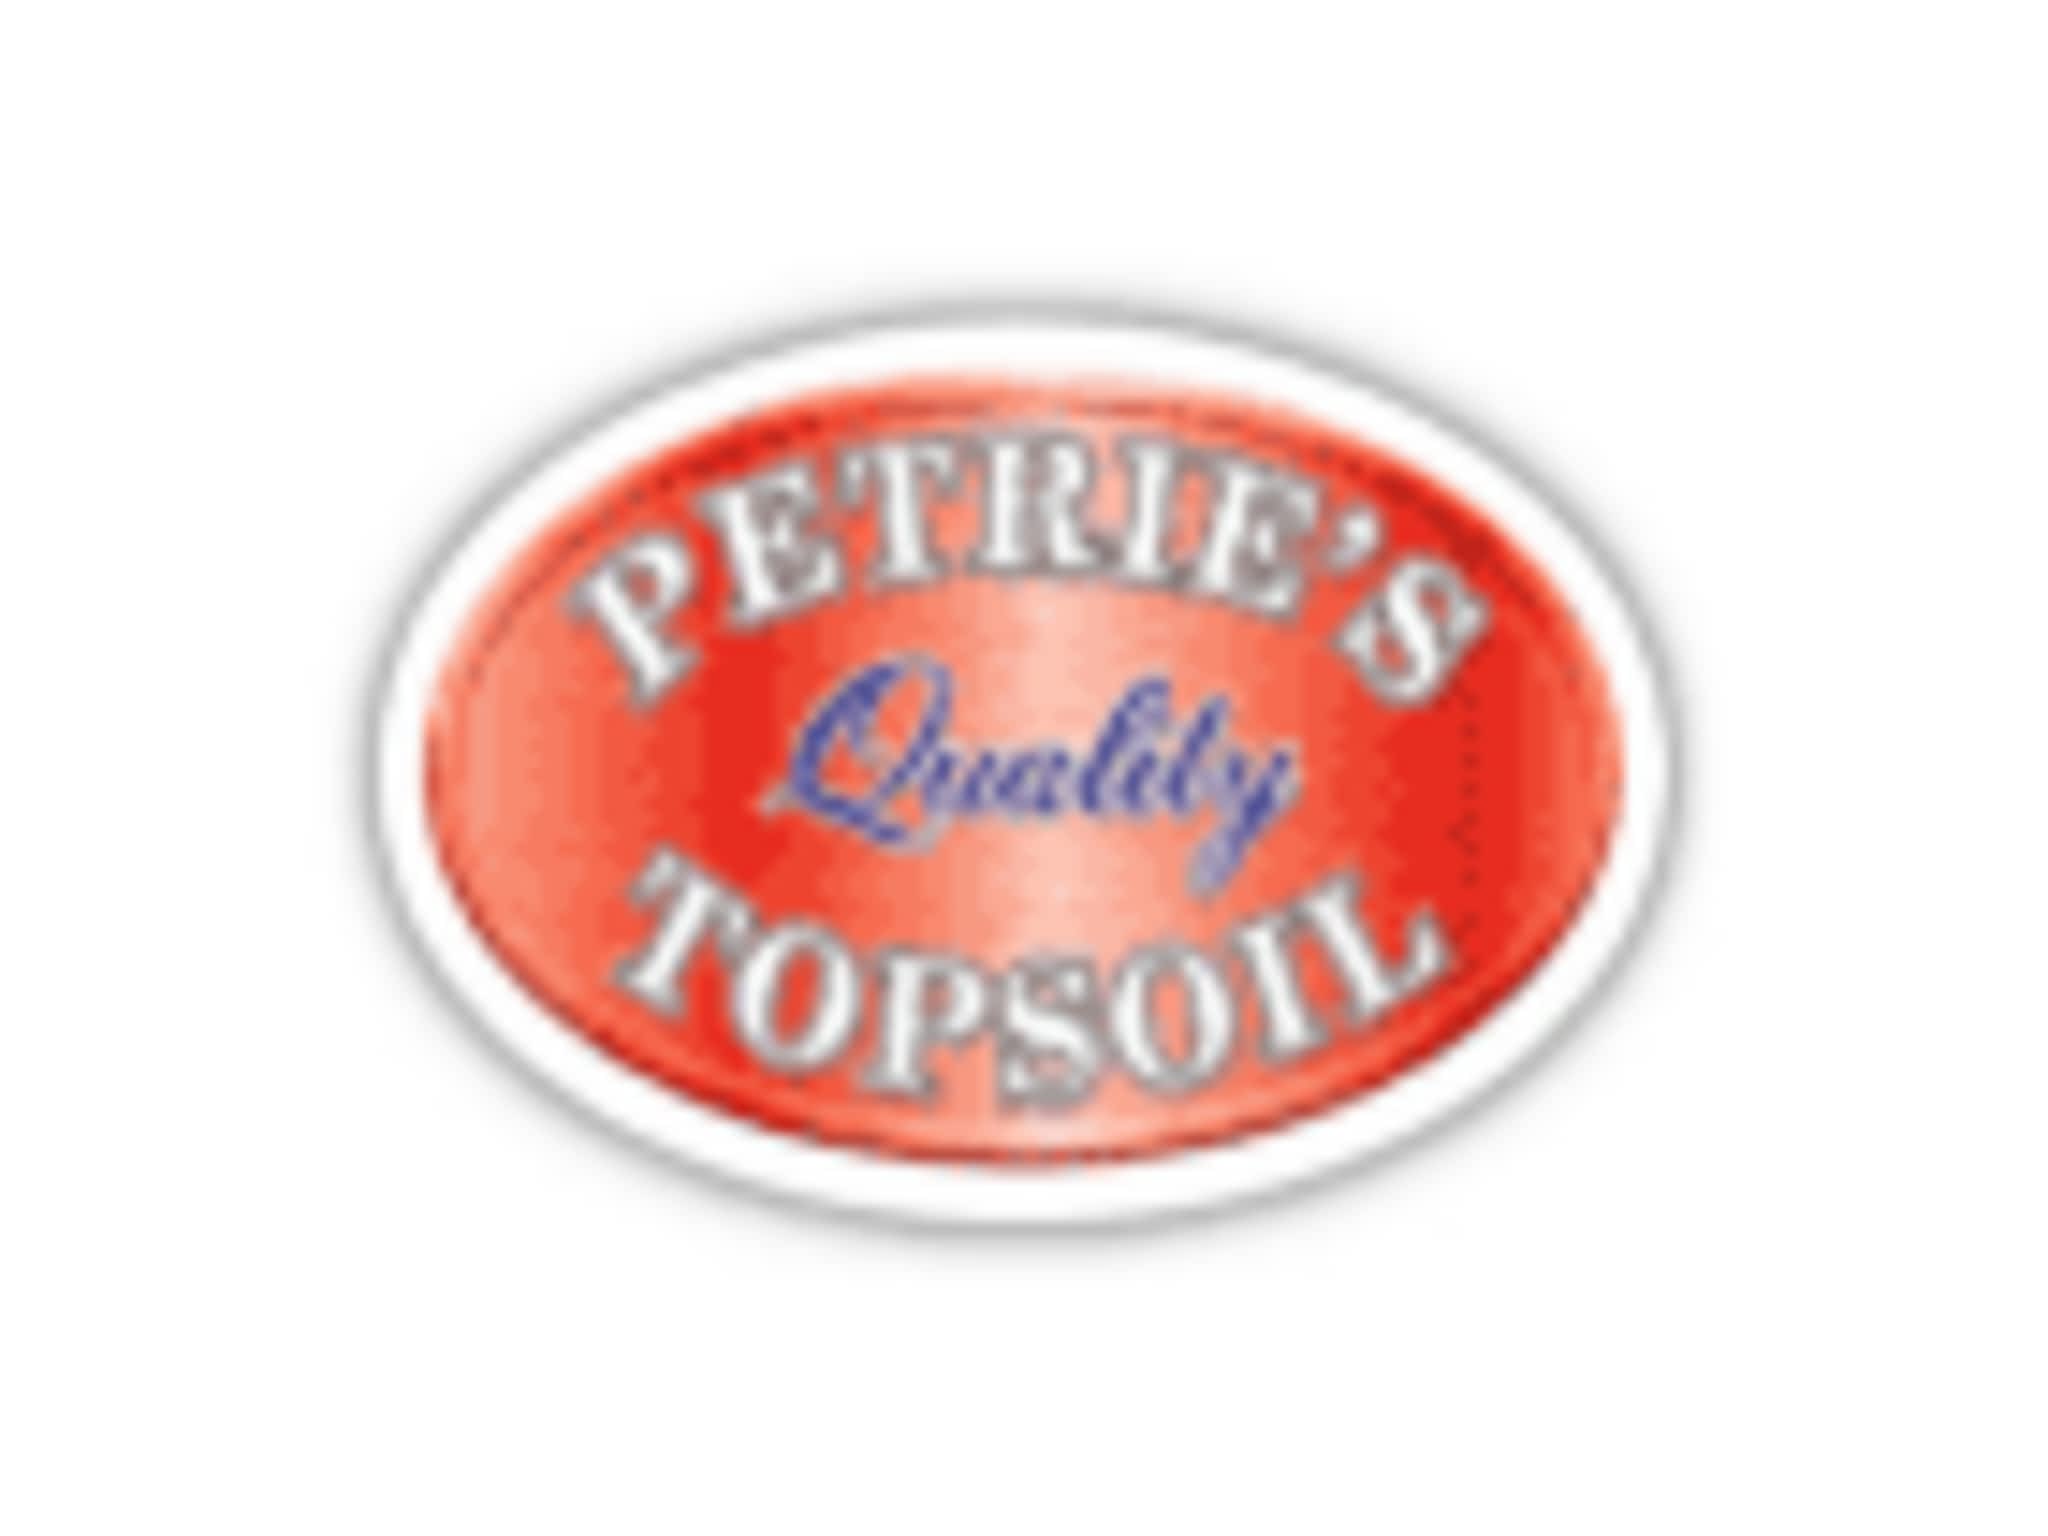 photo Petrie's Quality Topsoil Ltd